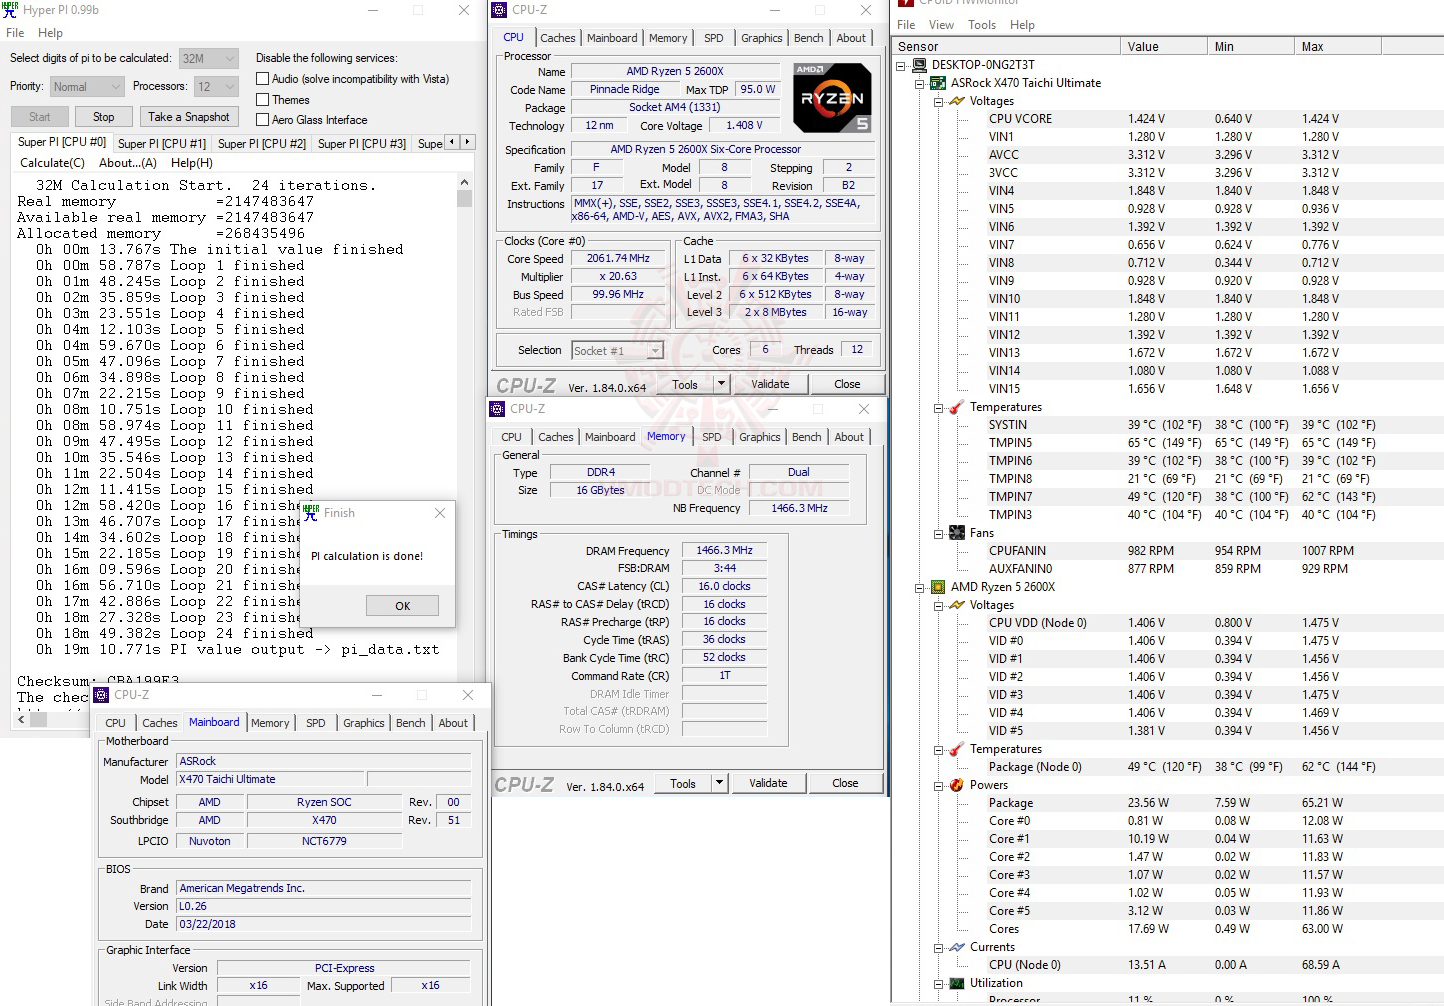 h32 1 AMD RYZEN 5 2600X PROCESSOR REVIEW